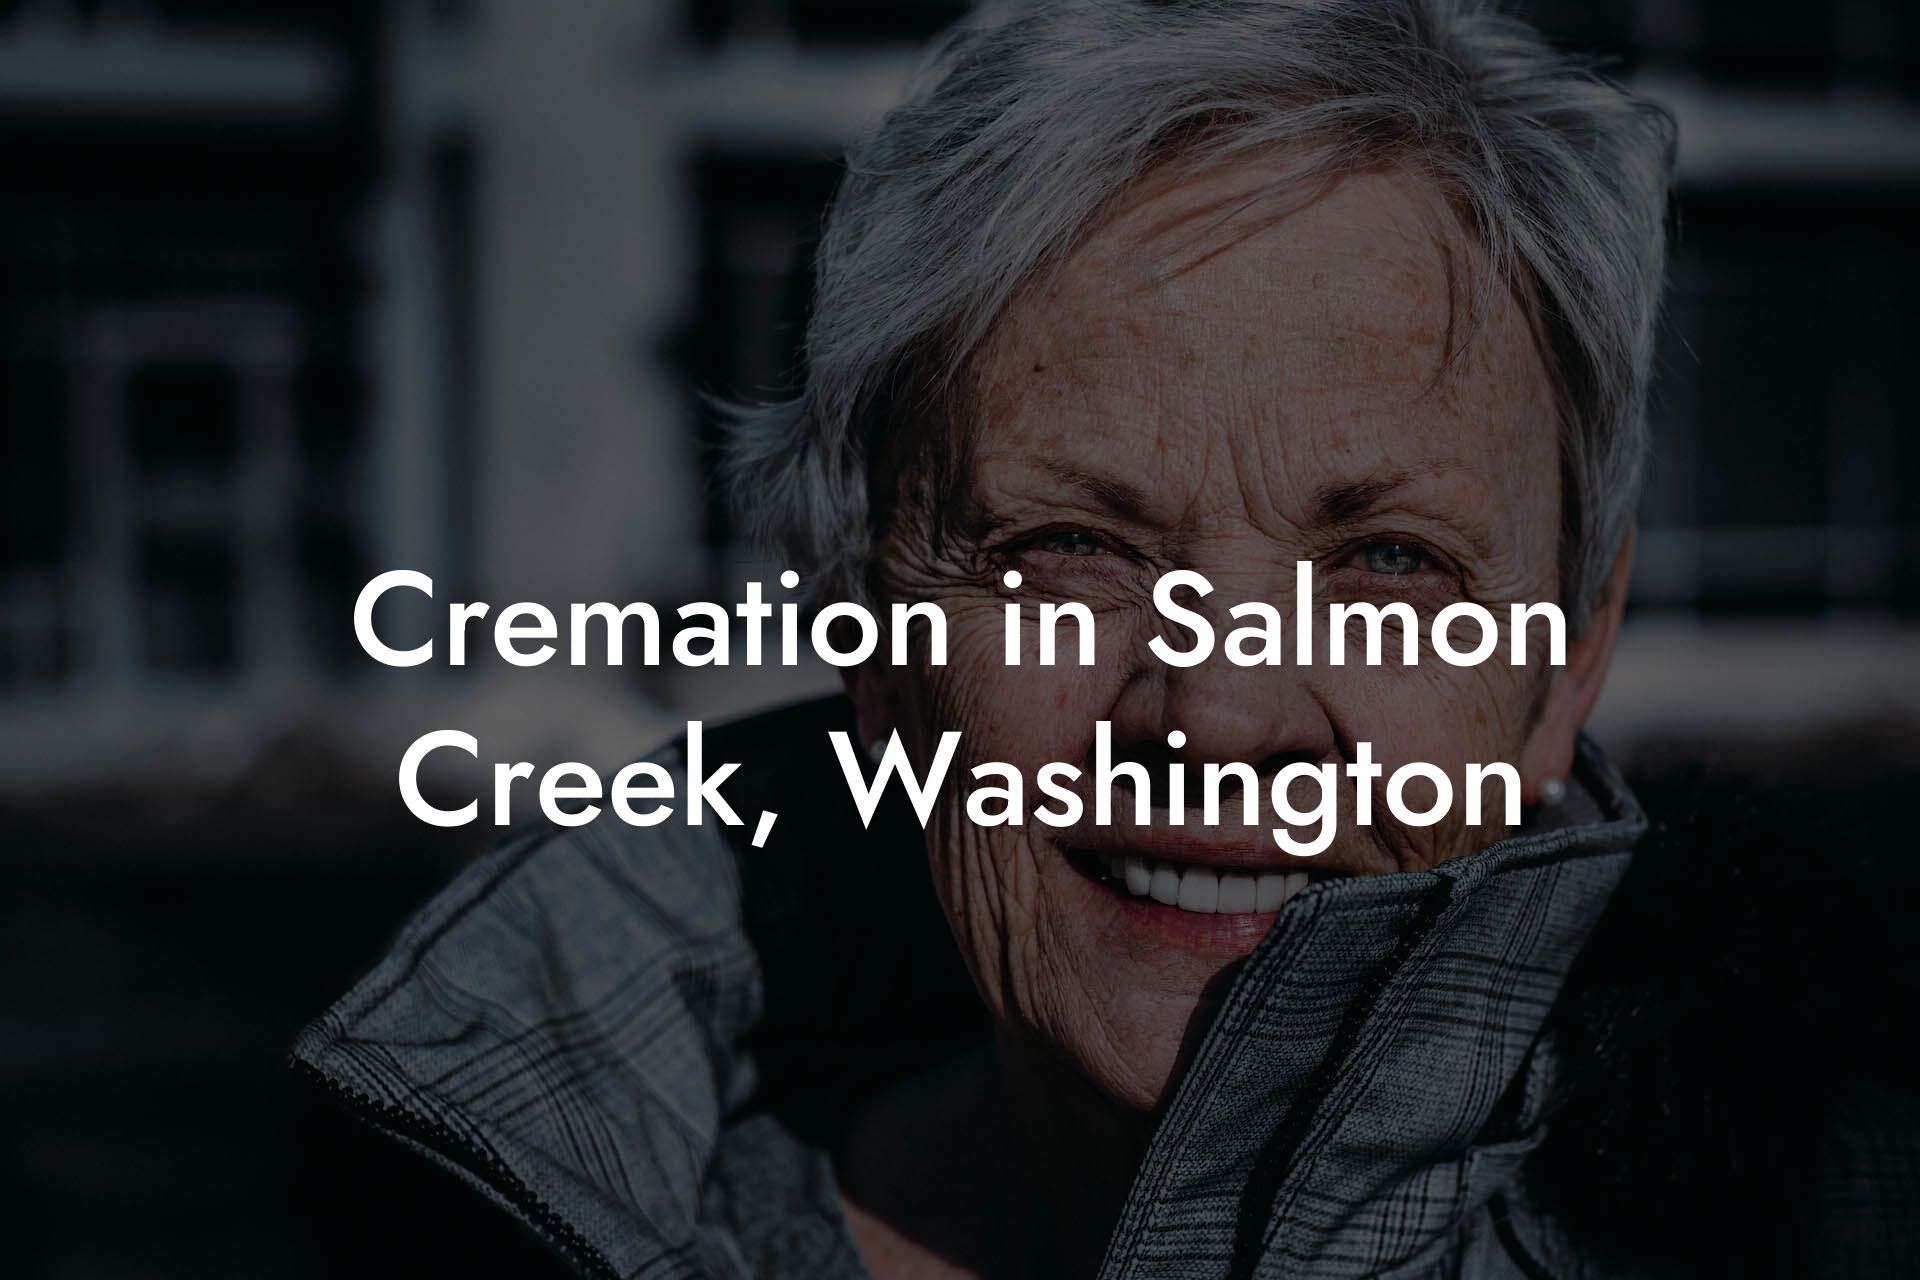 Cremation in Salmon Creek, Washington